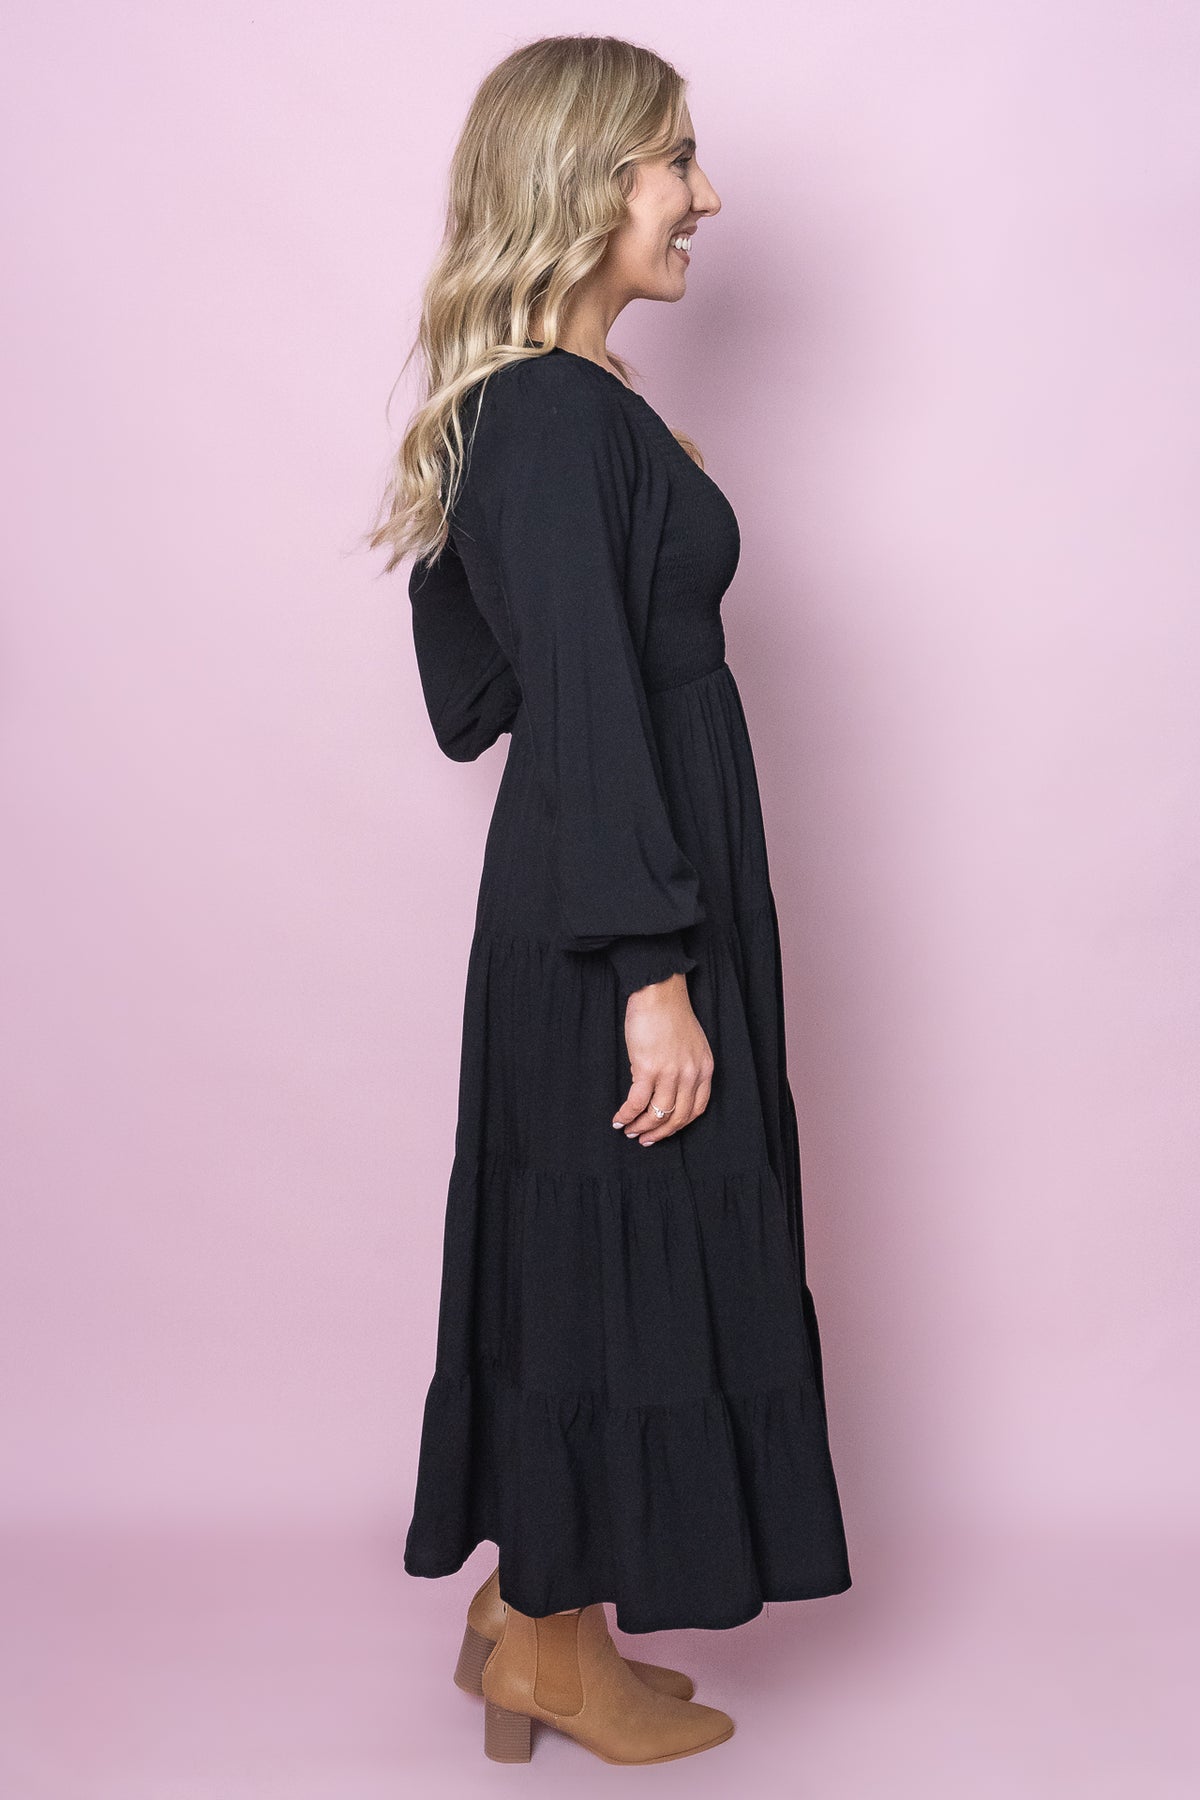 Samaria Dress in Black